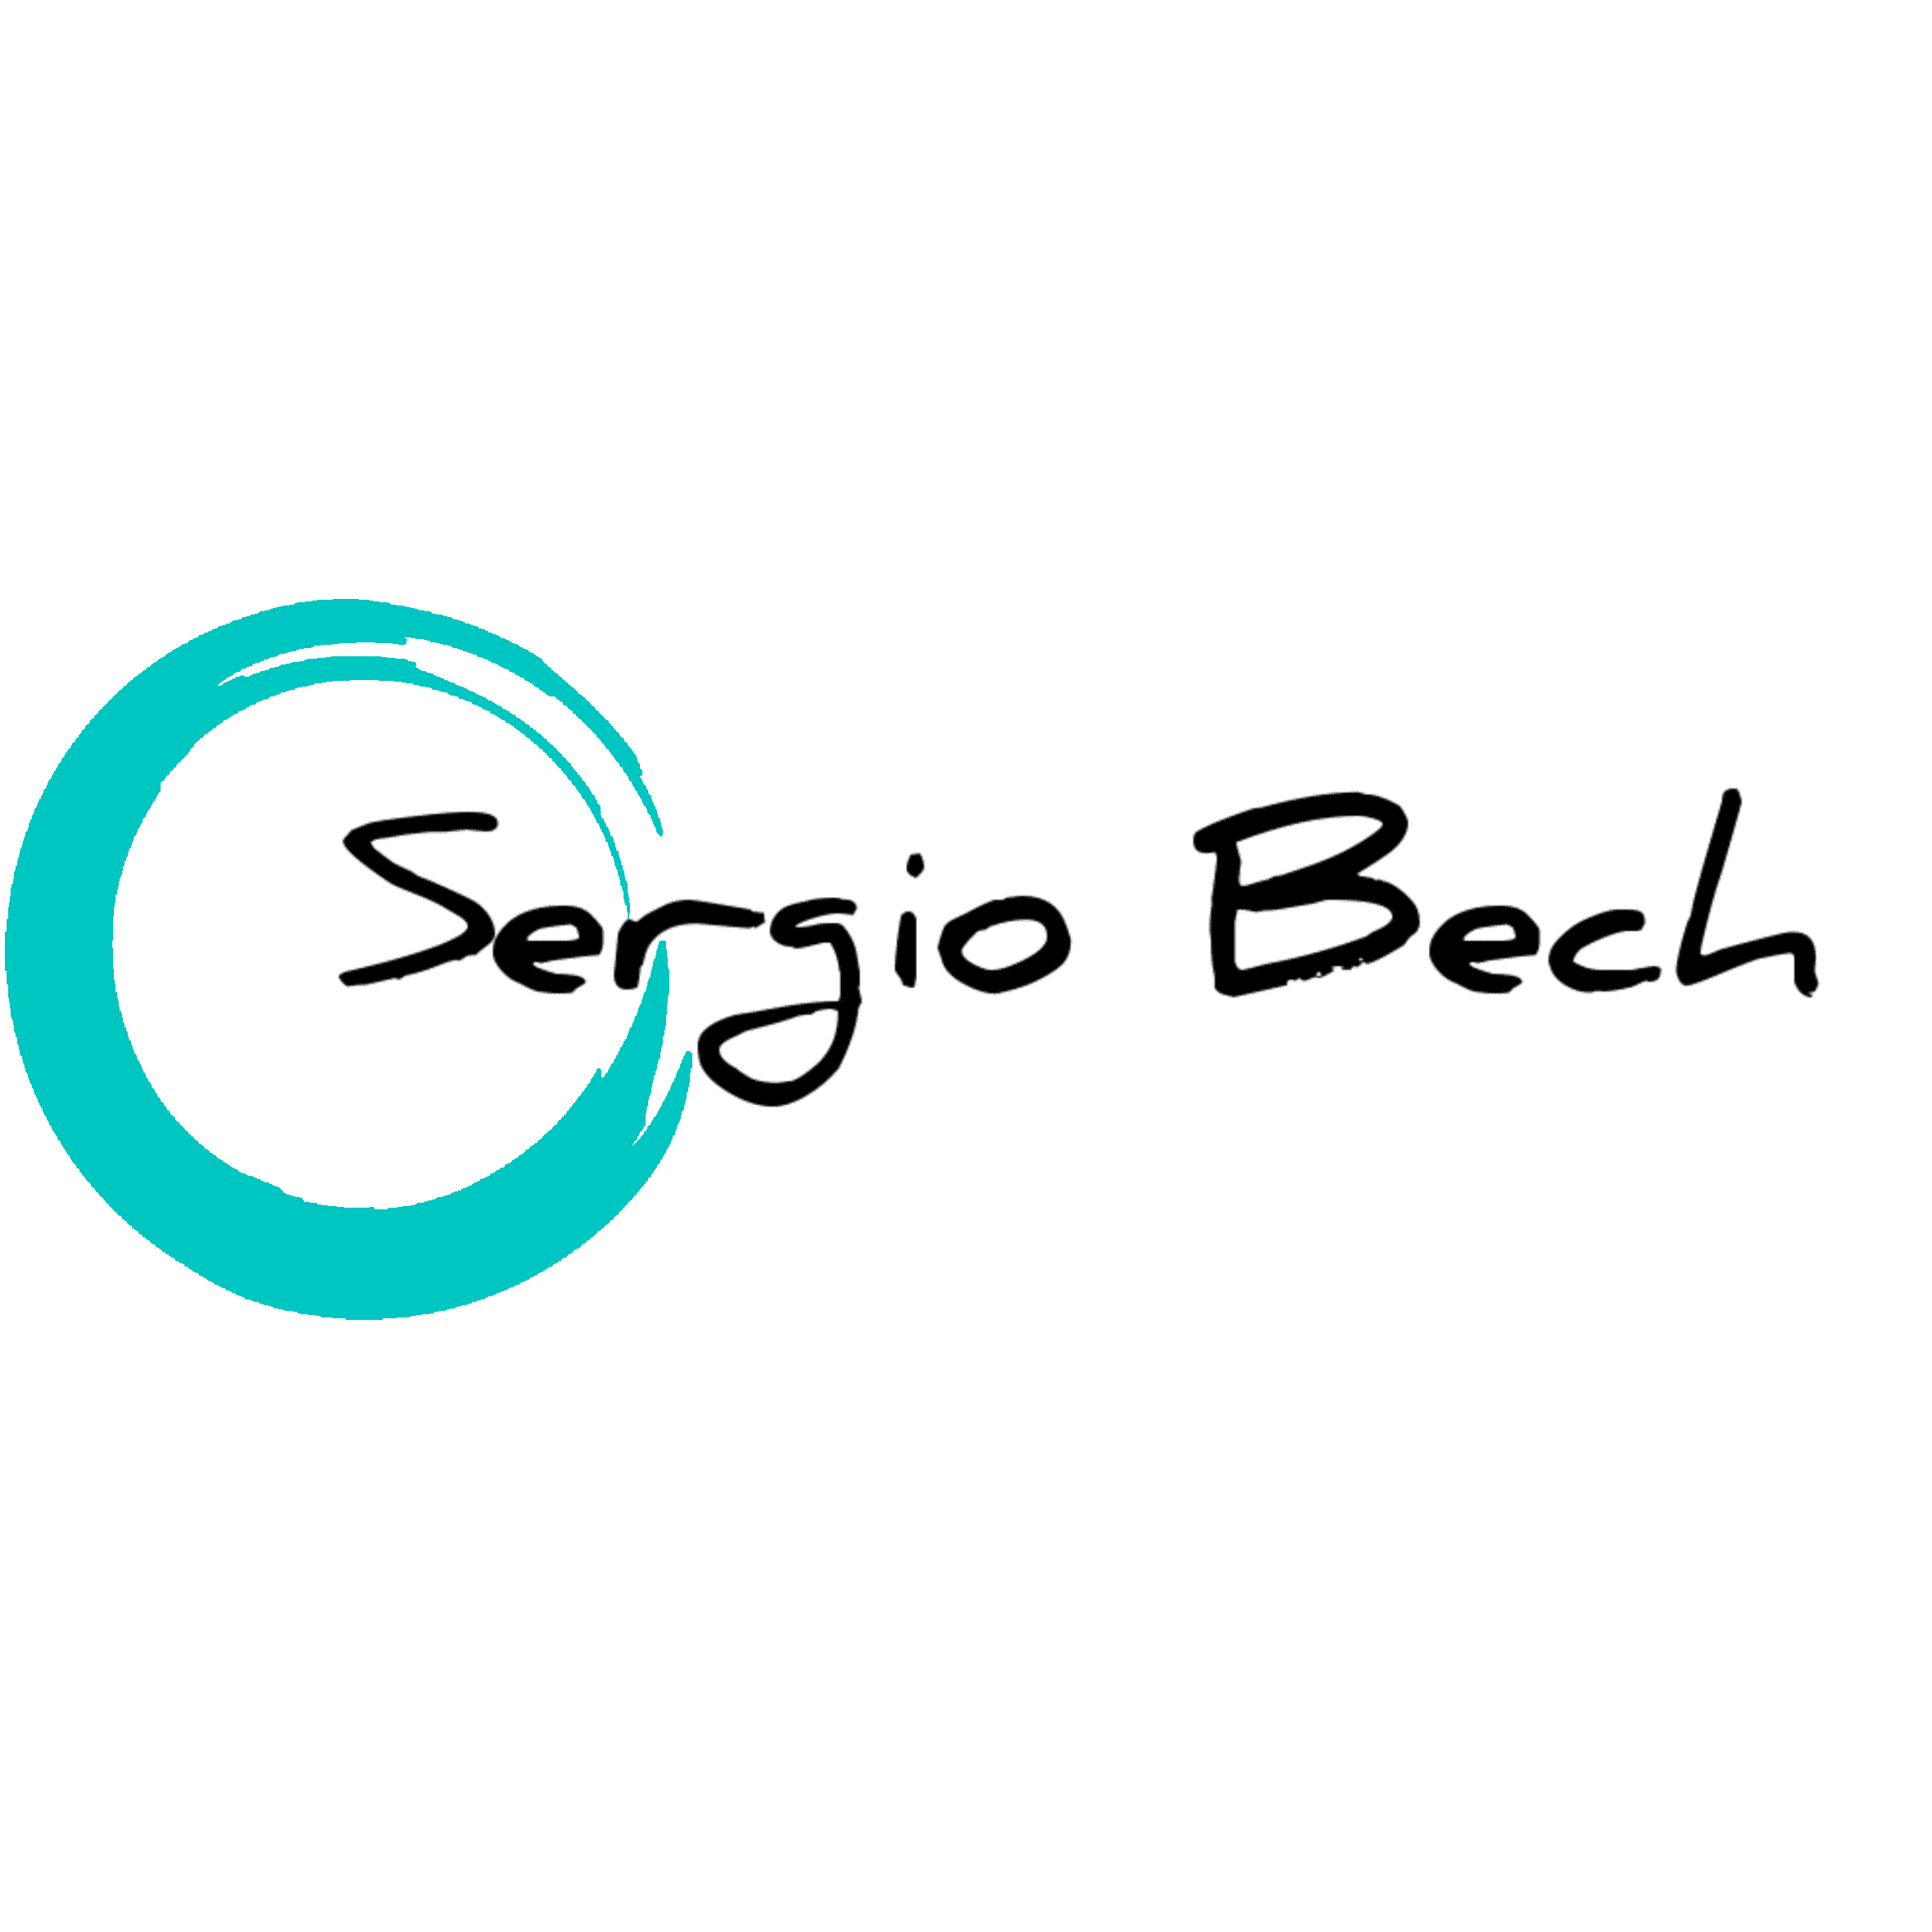 Sergio Bech